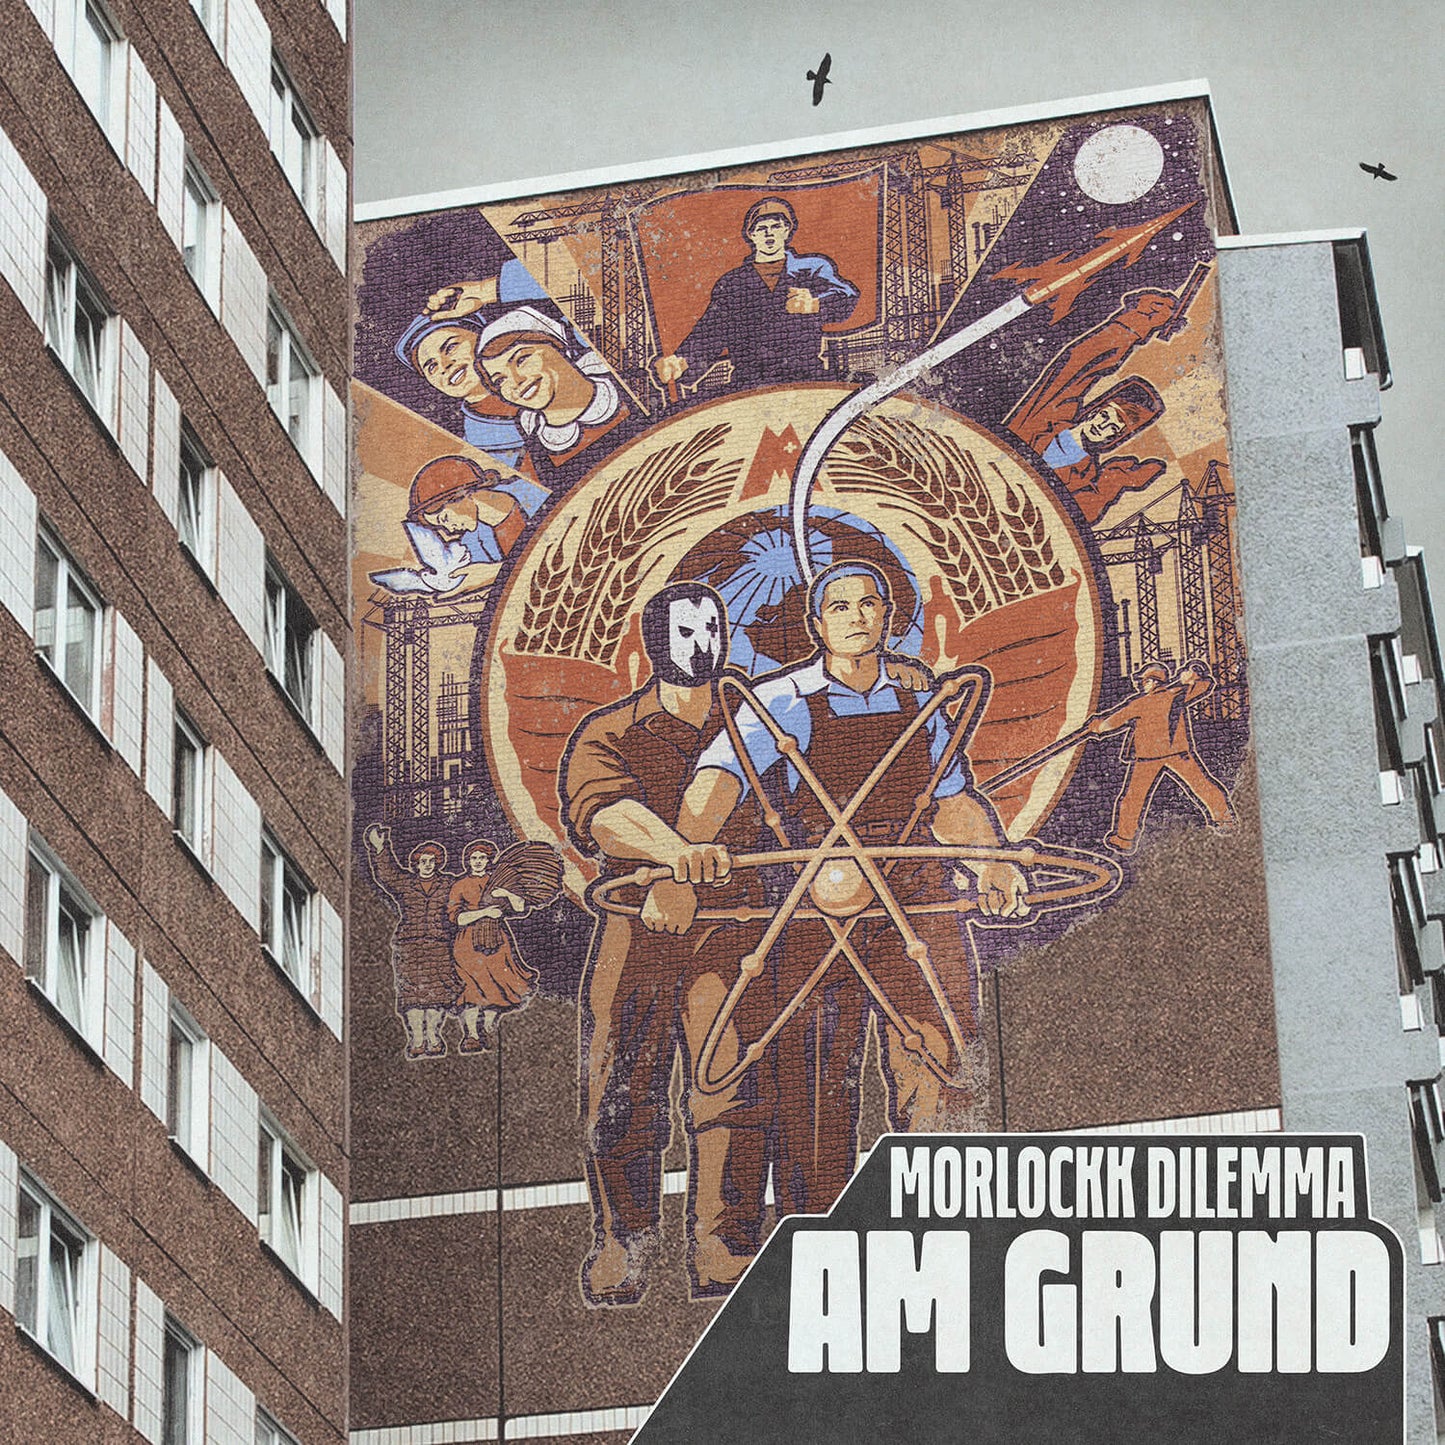 Morlockk Dilemma - Am Grund (CD)